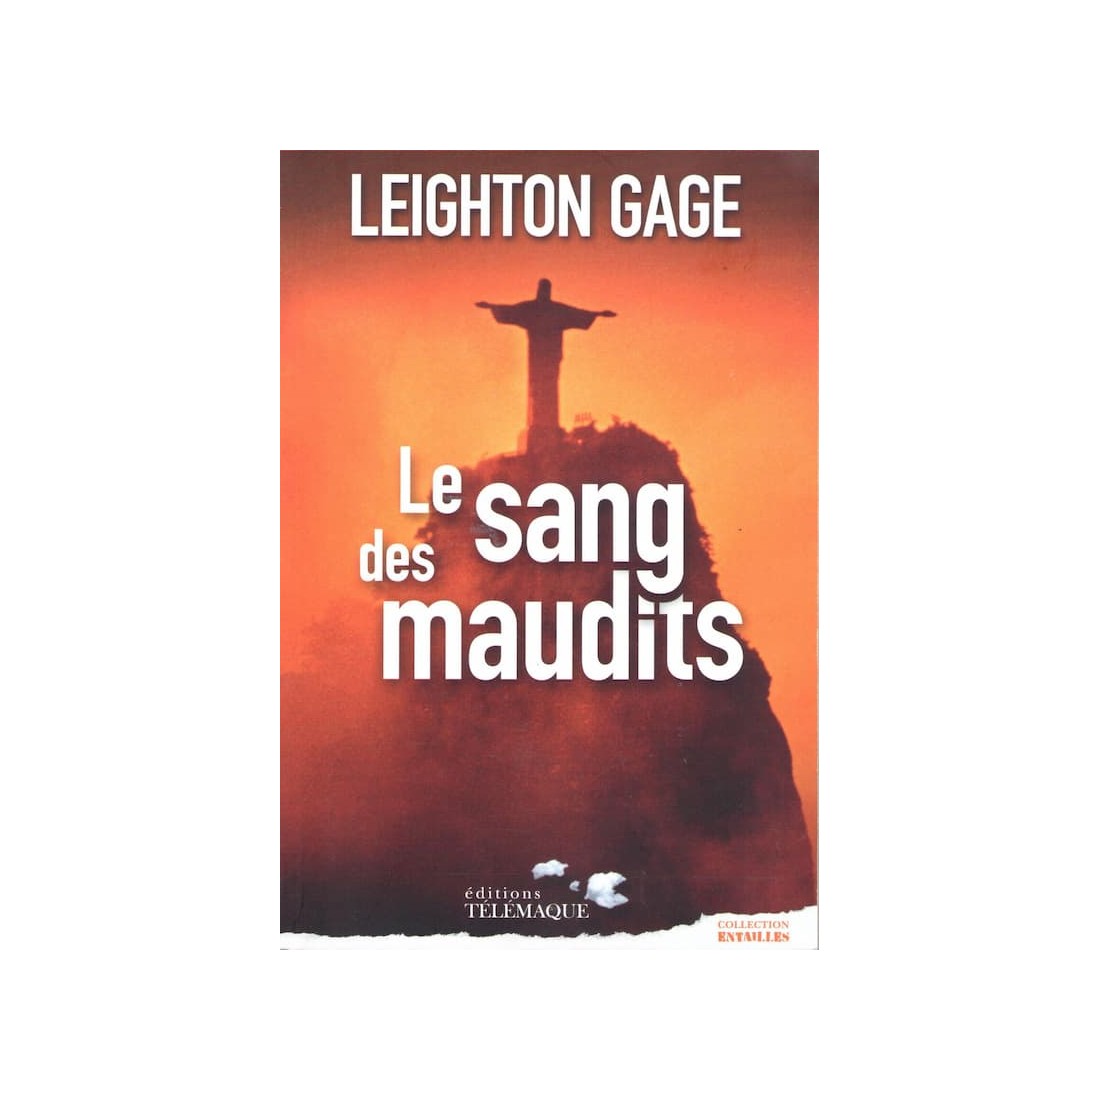 Le sang des maudits - Roman de Leighton Gage - Ocazlivres.com